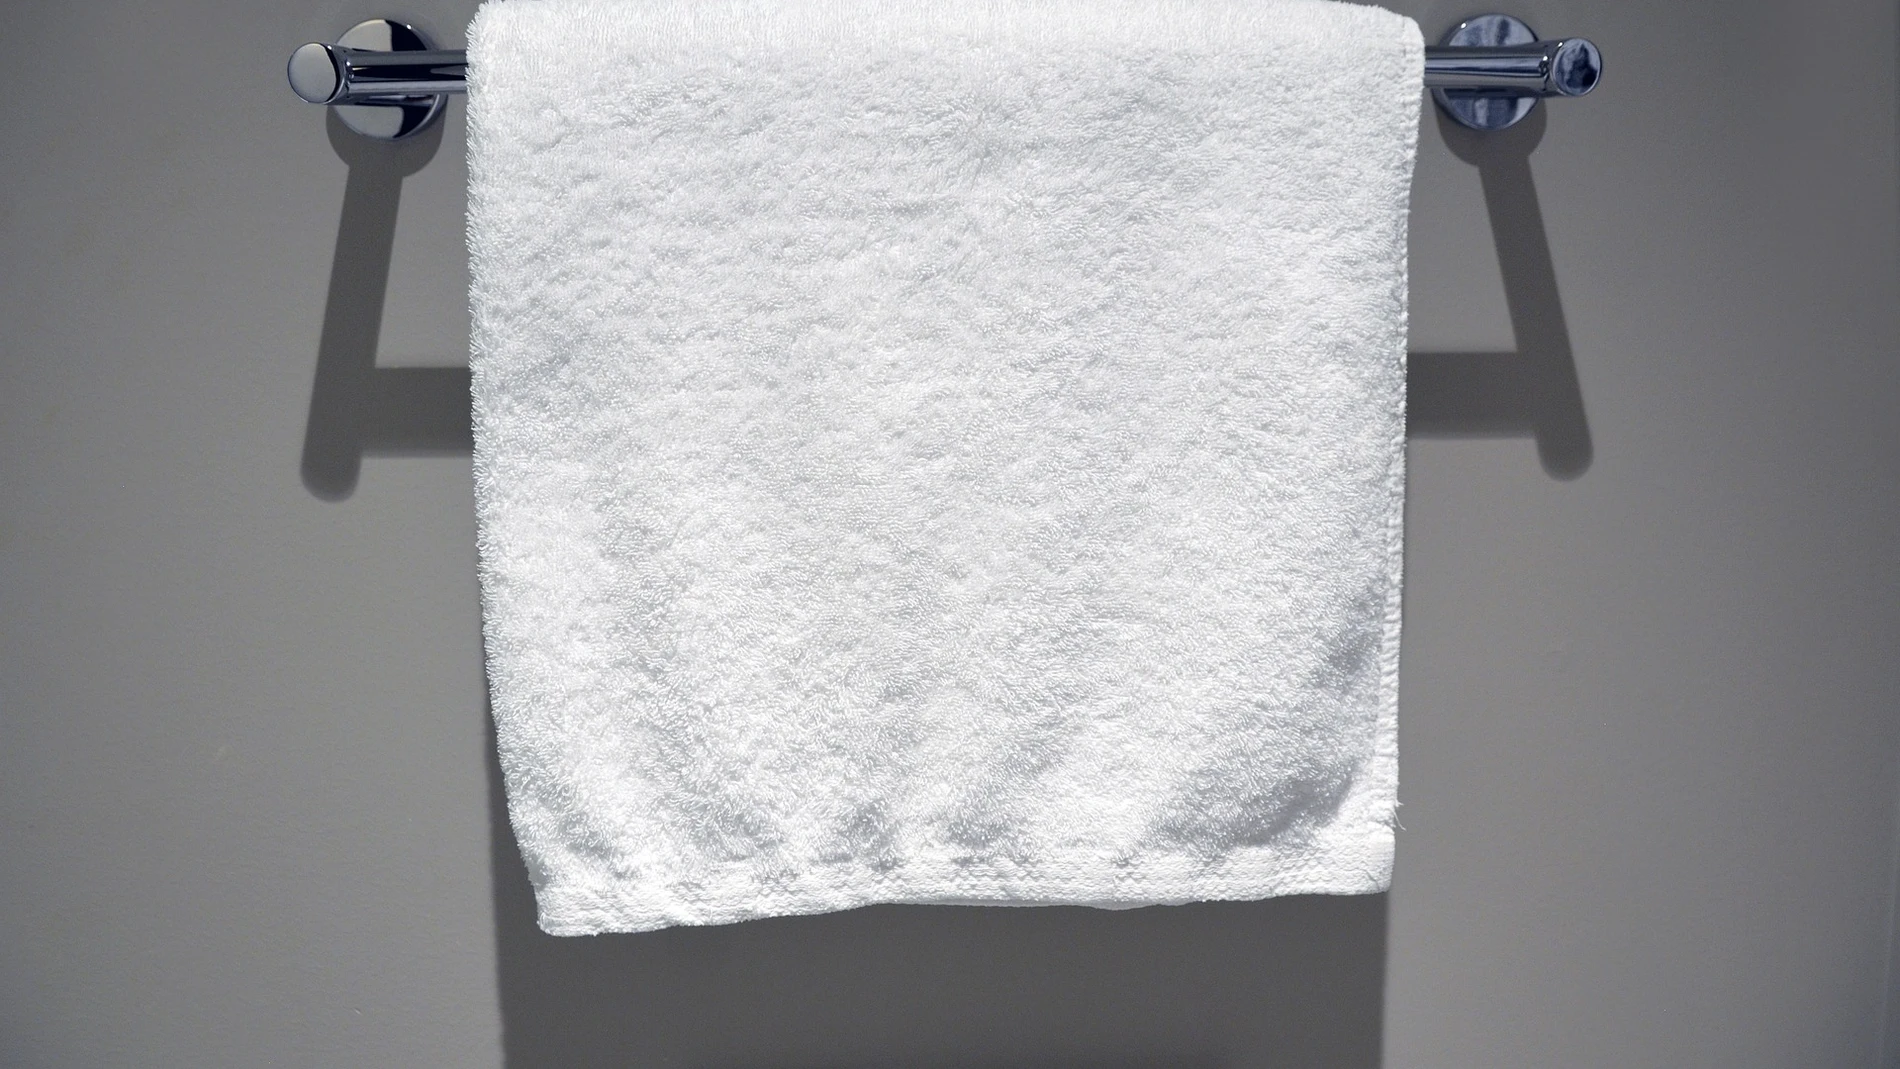 Полотенце верхнее. Полотенце висит. Полотенце махровое белый. Белое полотенце висит. Полотенца для ванны висячие.